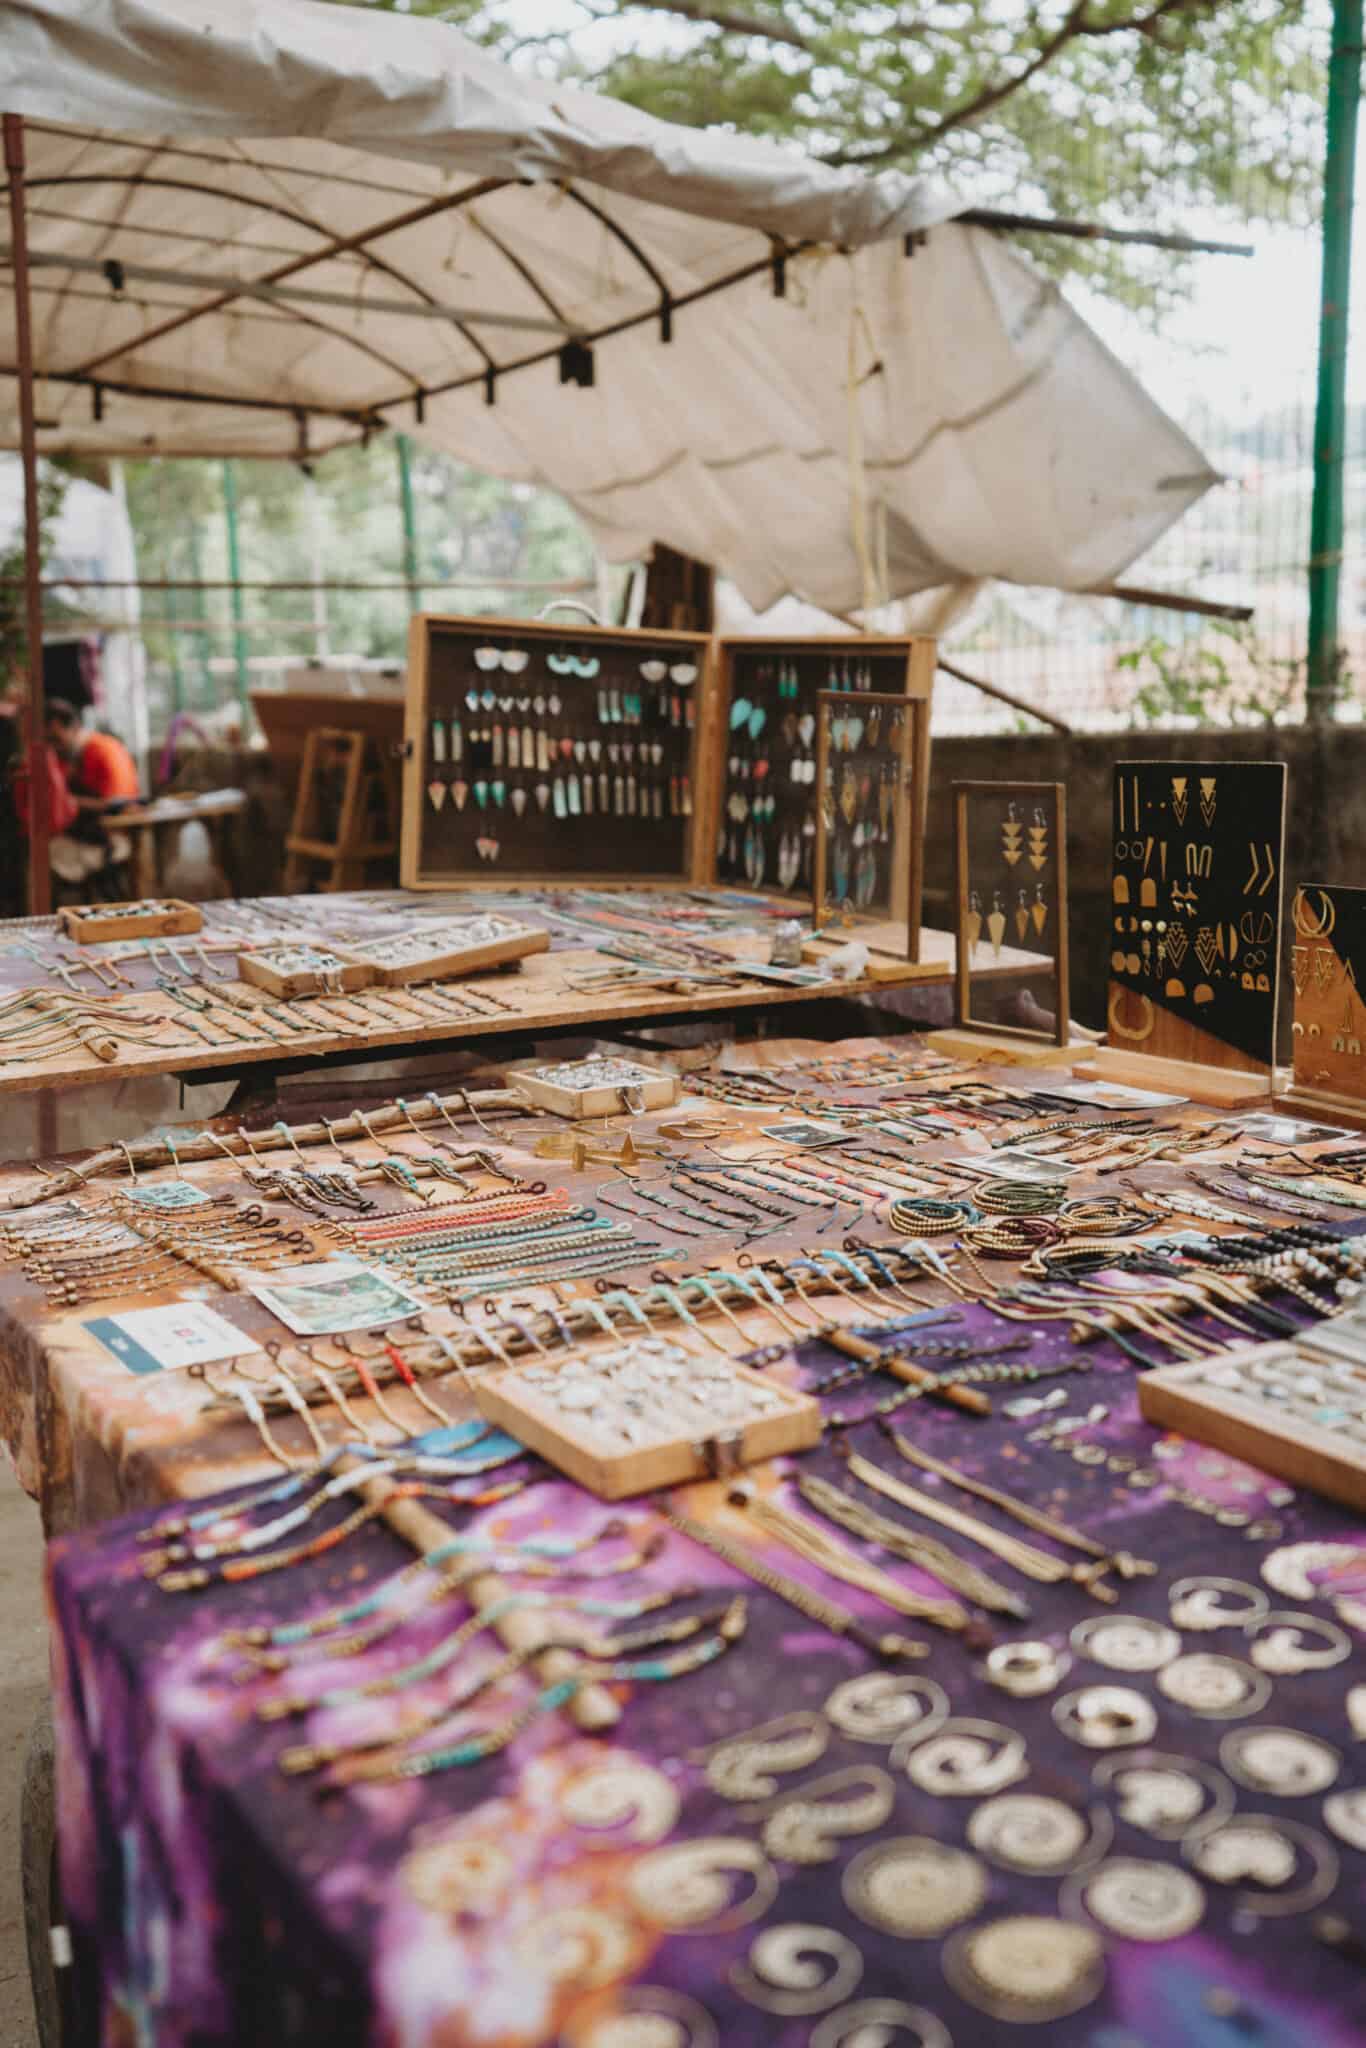 A Sayulita market stall abundant with jewelry.